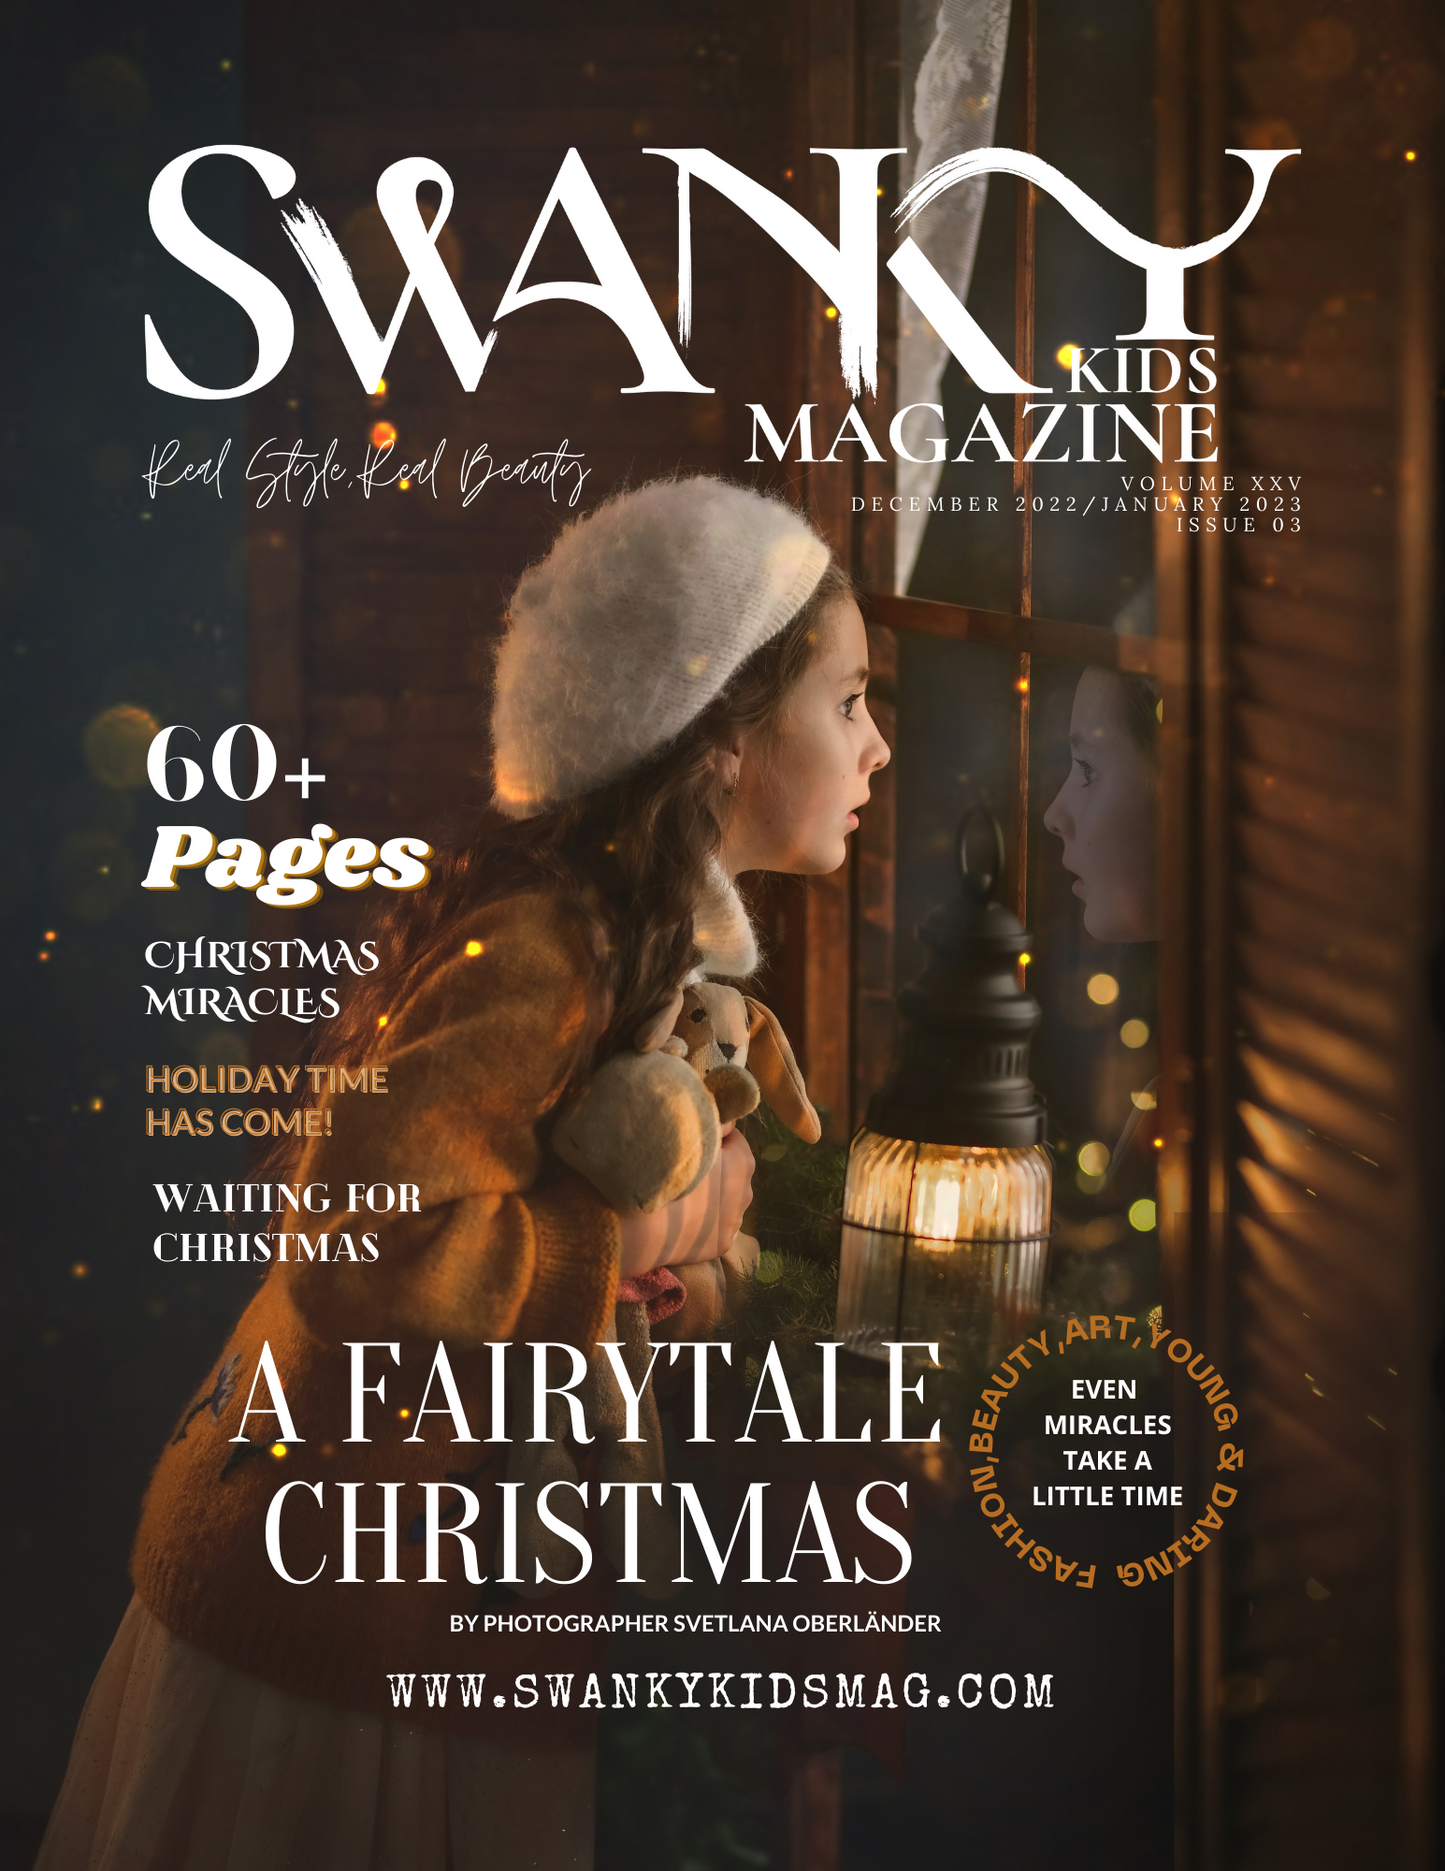 Swanky Kids Christmas Special Editions Dec/Jan 2022/2023 VOL XXV Issue 03